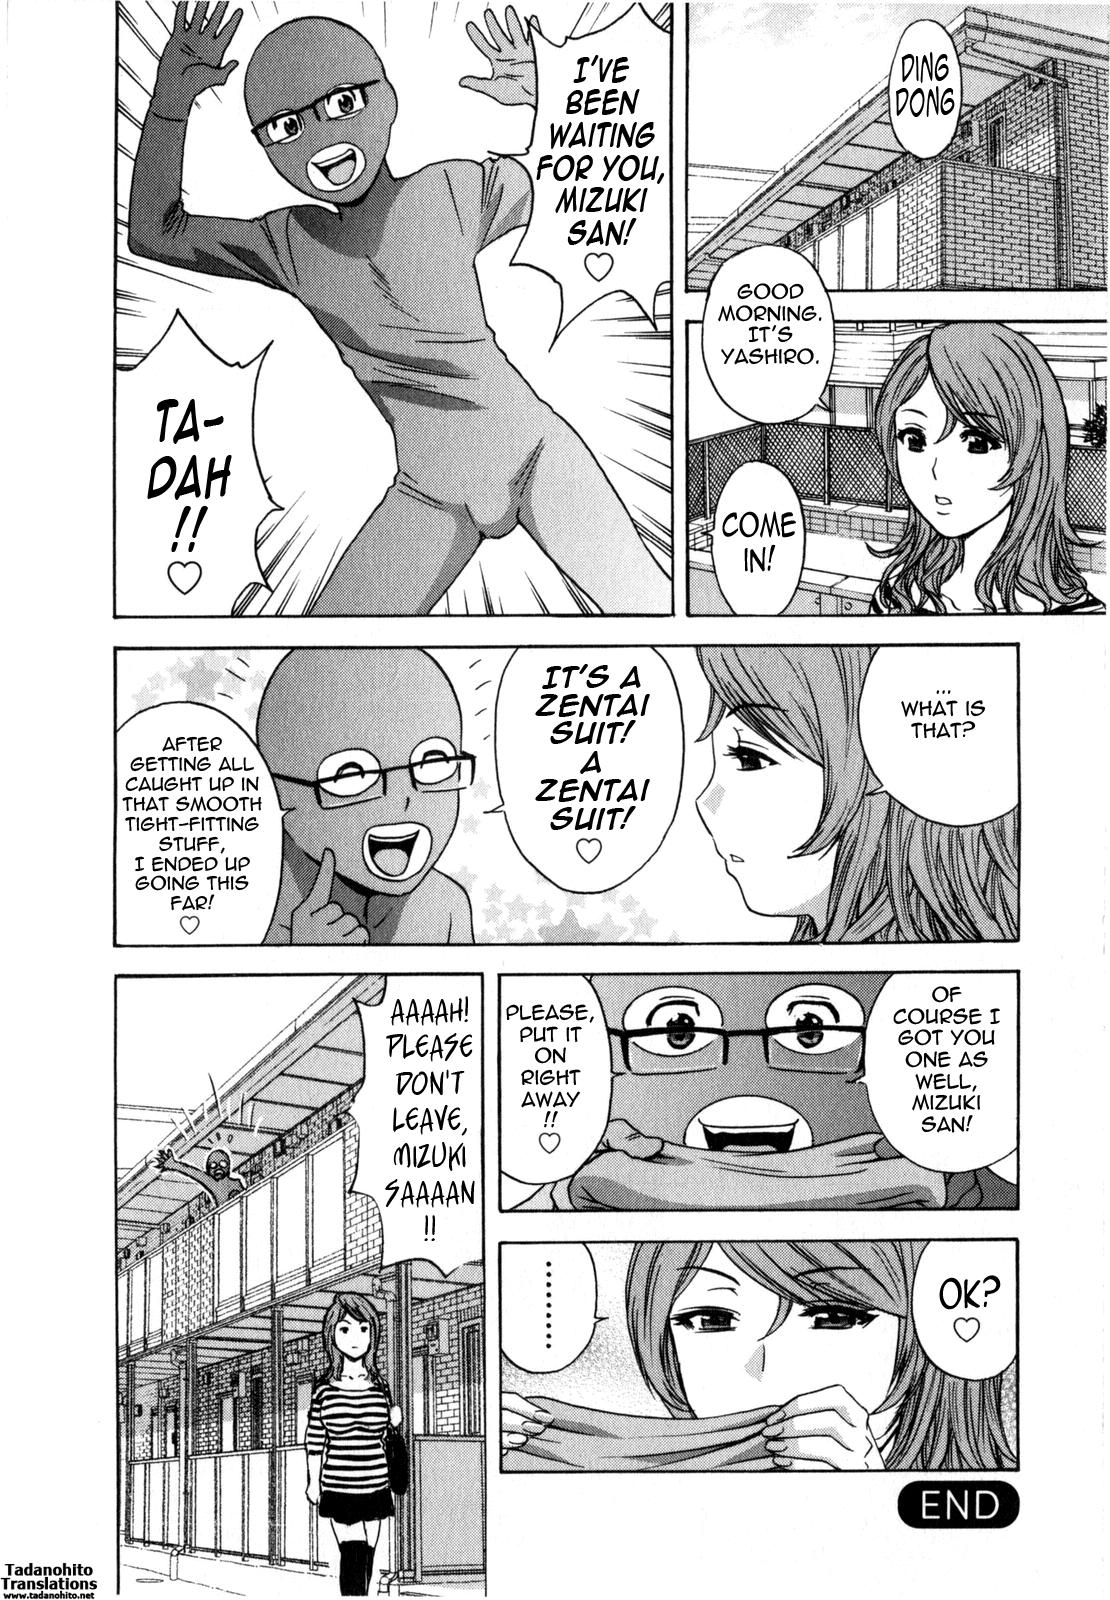 [Hidemaru] Life with Married Women Just Like a Manga 2 - Ch. 1-6 [English] {Tadanohito} 103